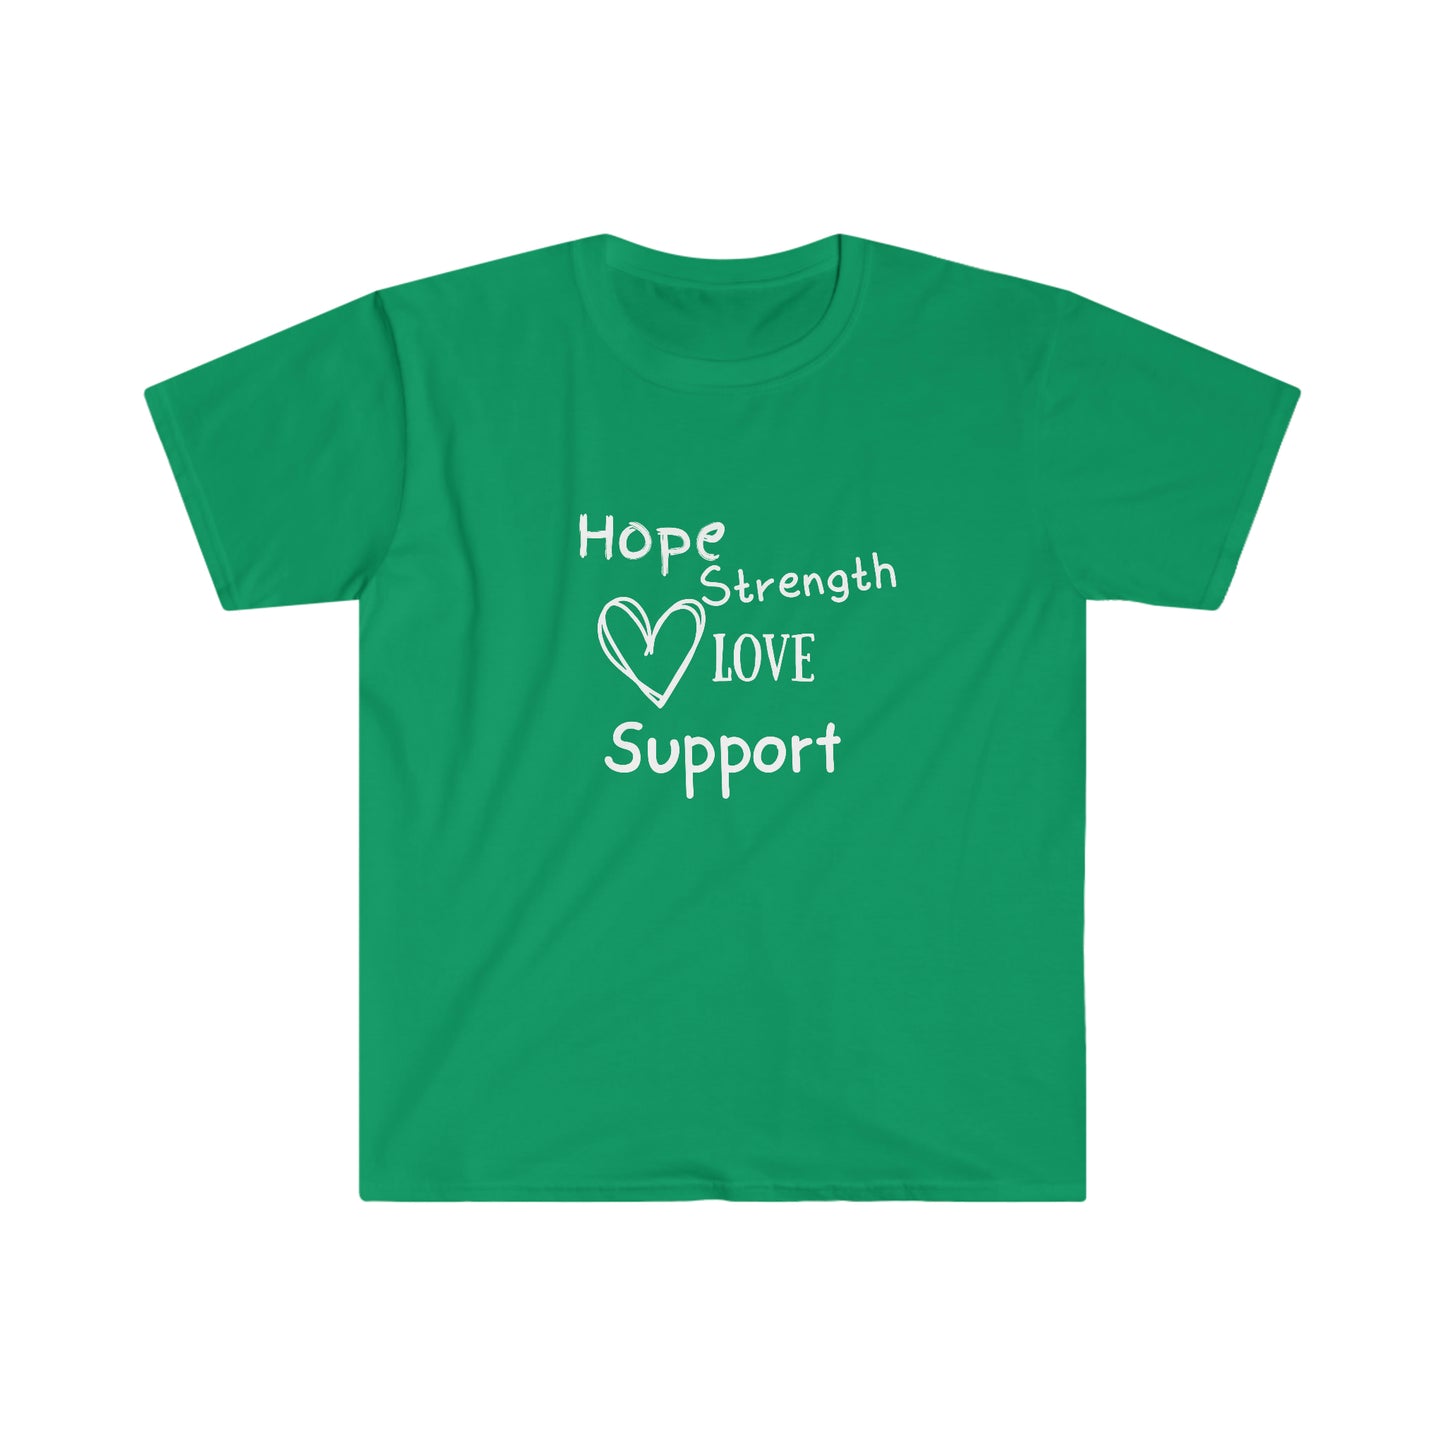 Feel-Good Reads Charity T-Shirt